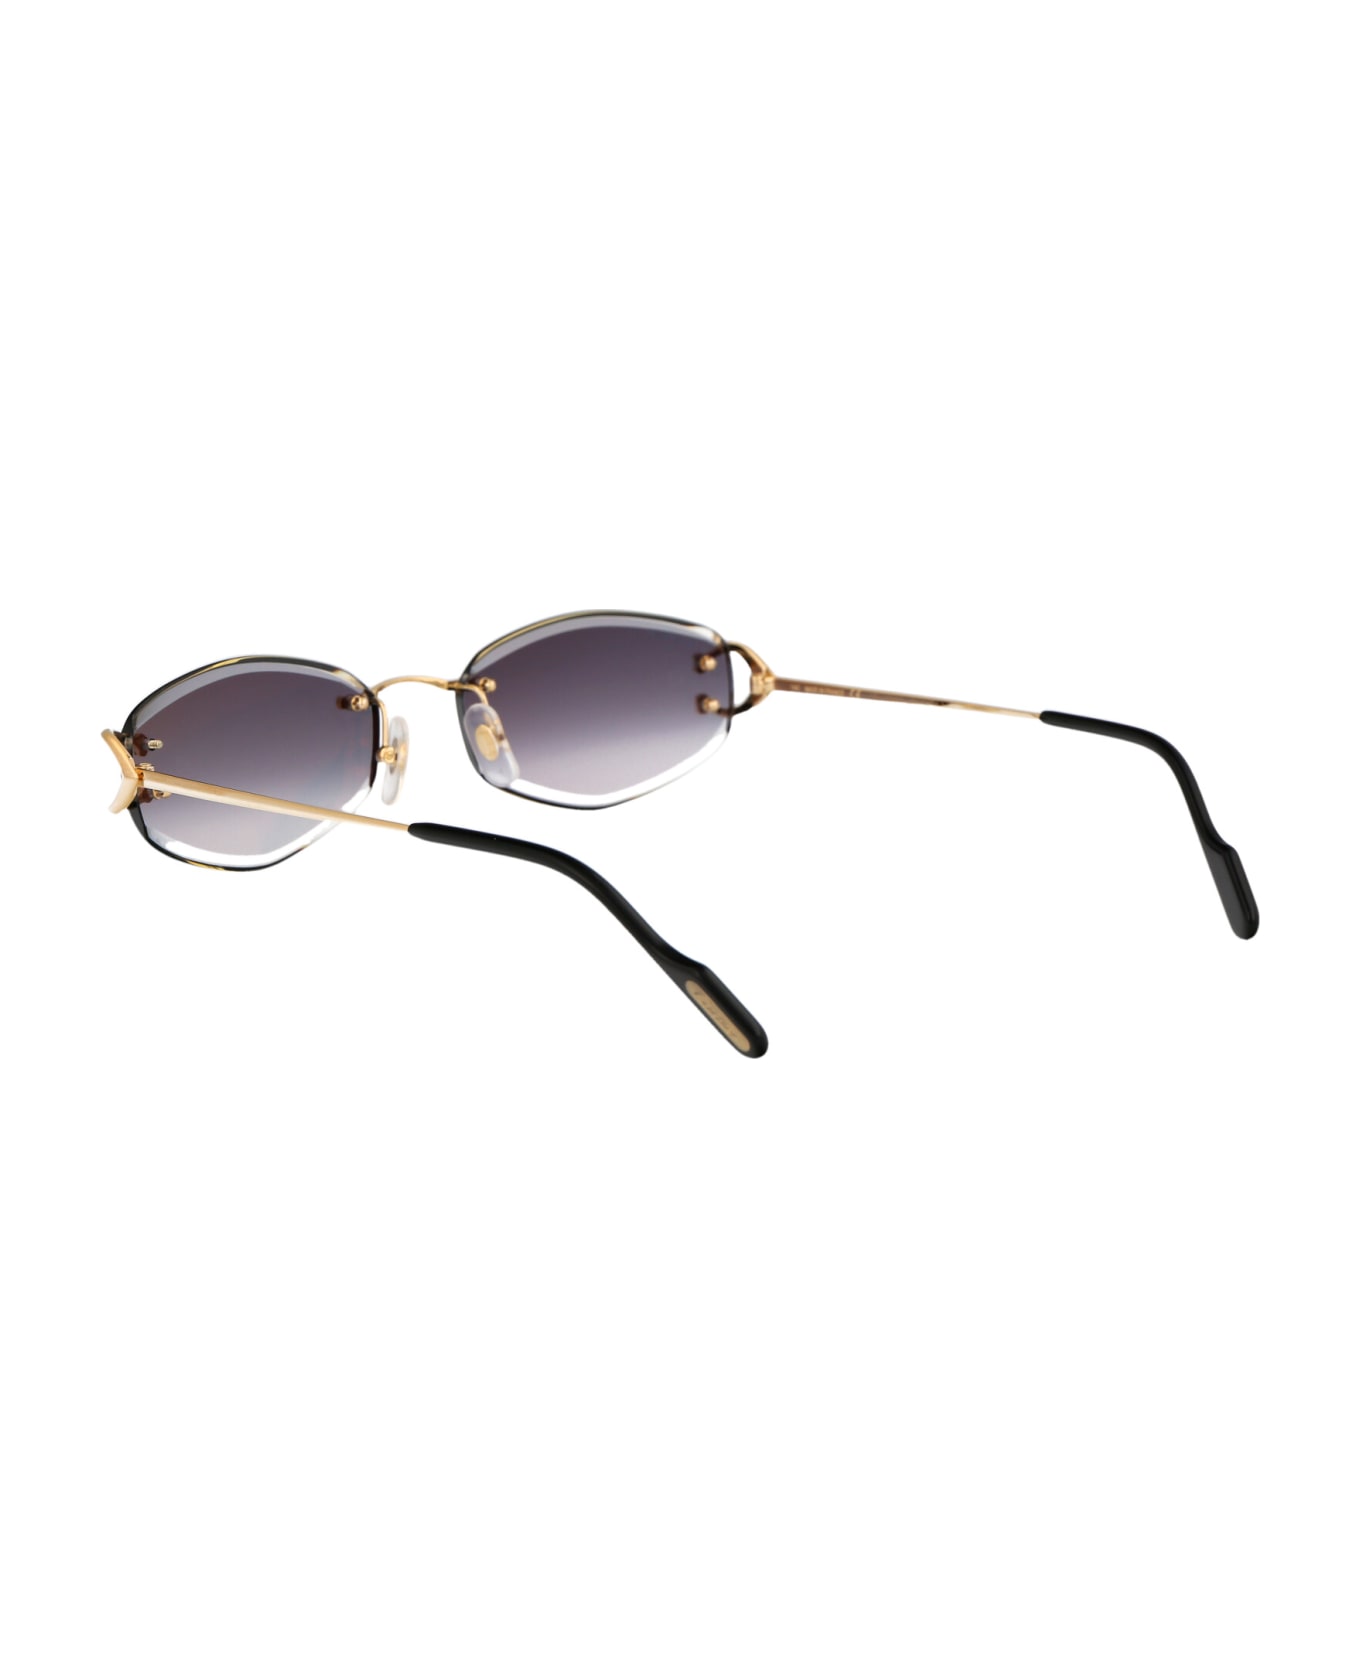 Cartier Eyewear Ct0467s Sunglasses - 001 GOLD GOLD GREY